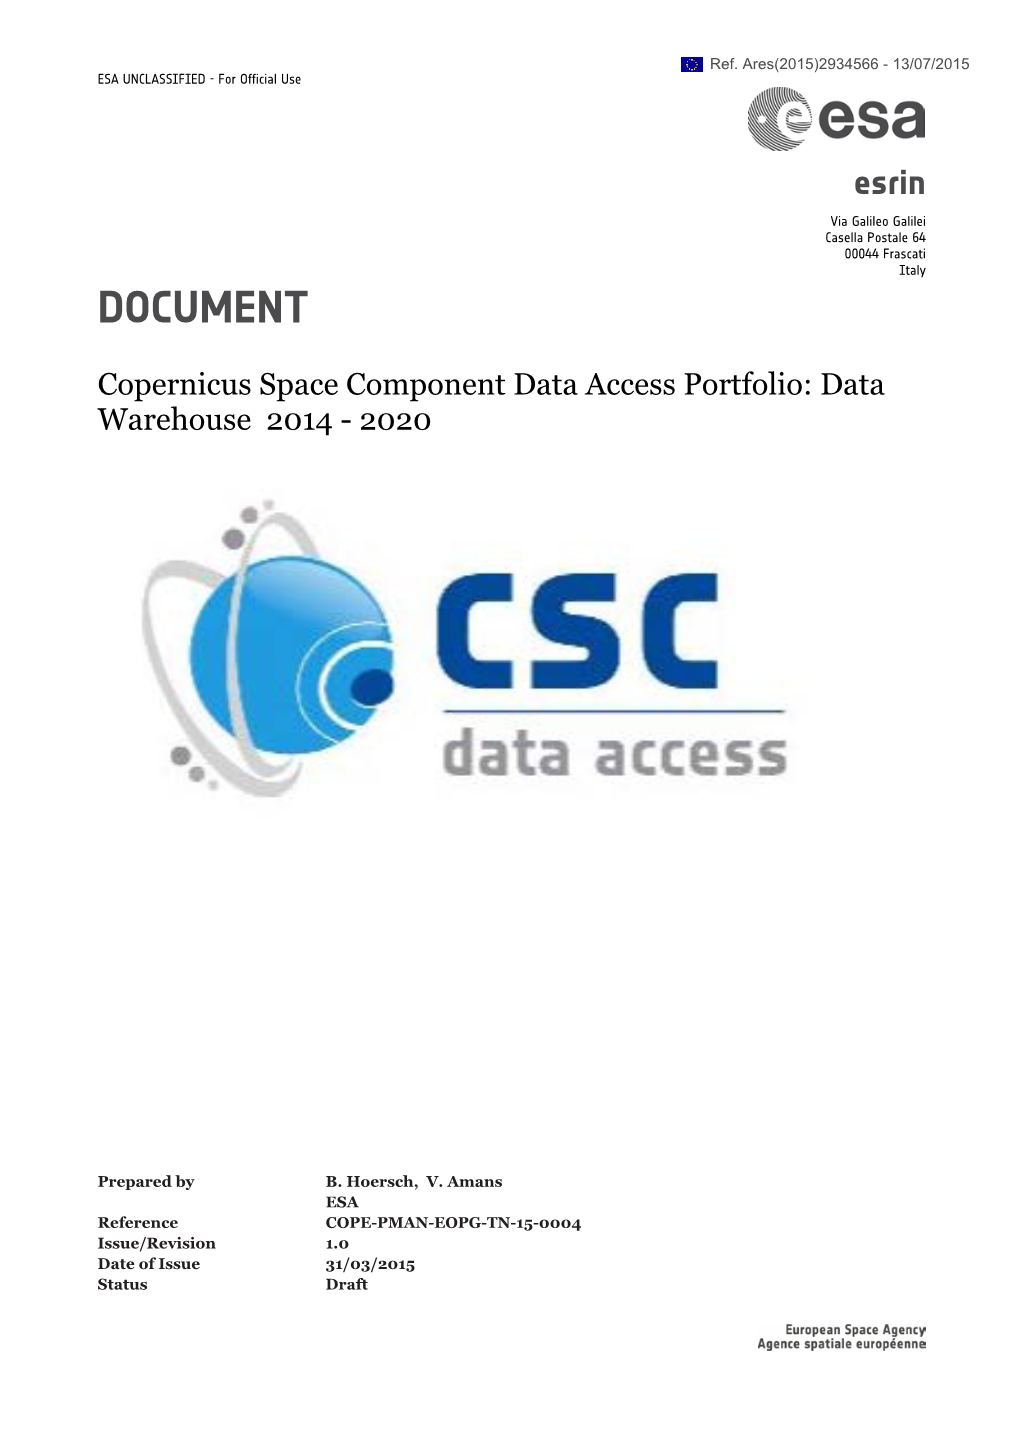 Copernicus Space Component Data Access Portfolio: Data Warehouse 2014 - 2020